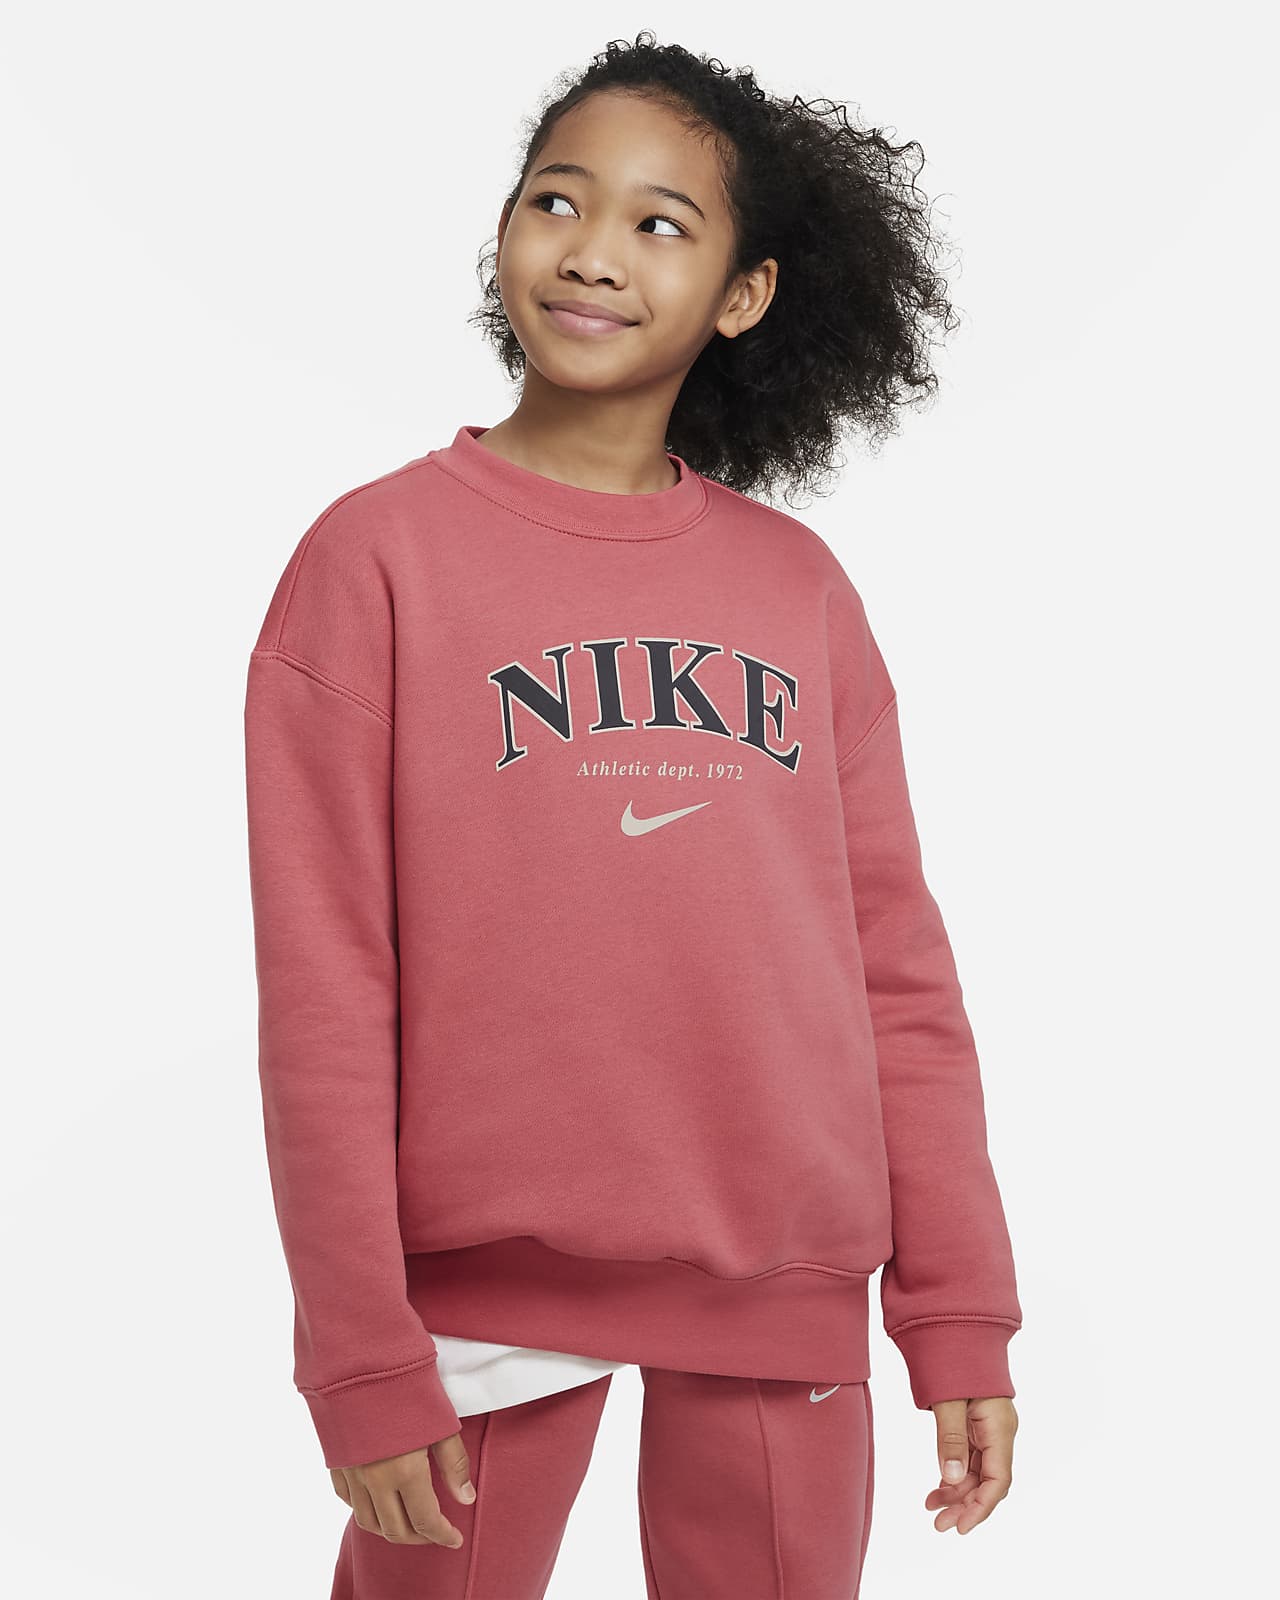 Overdimensioneret Nike Sportswear-sweatshirt til børn Nike DK